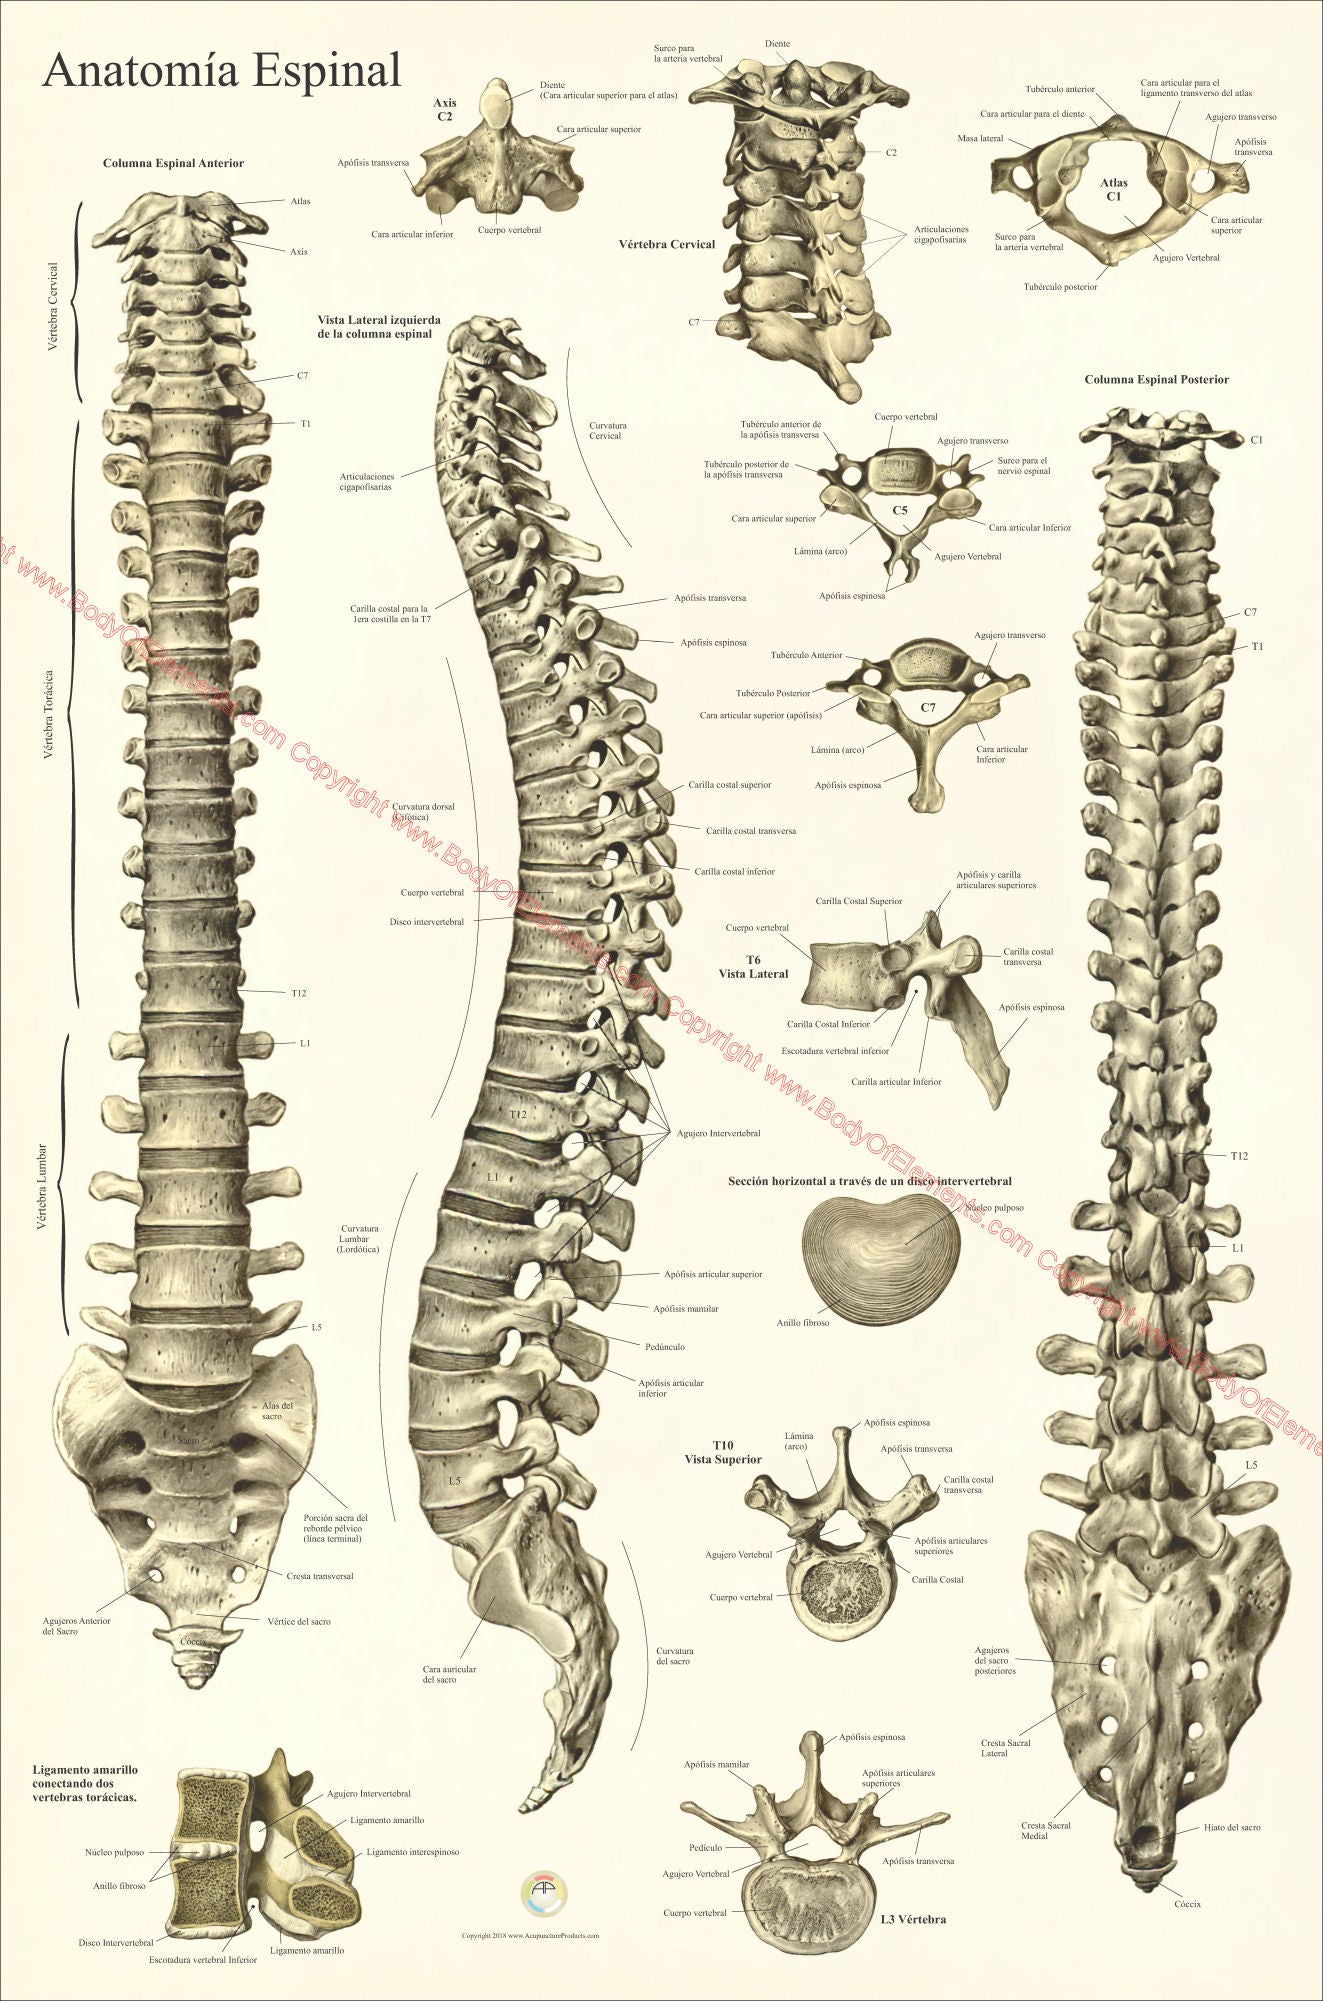 Human spine anatomy in Spanish